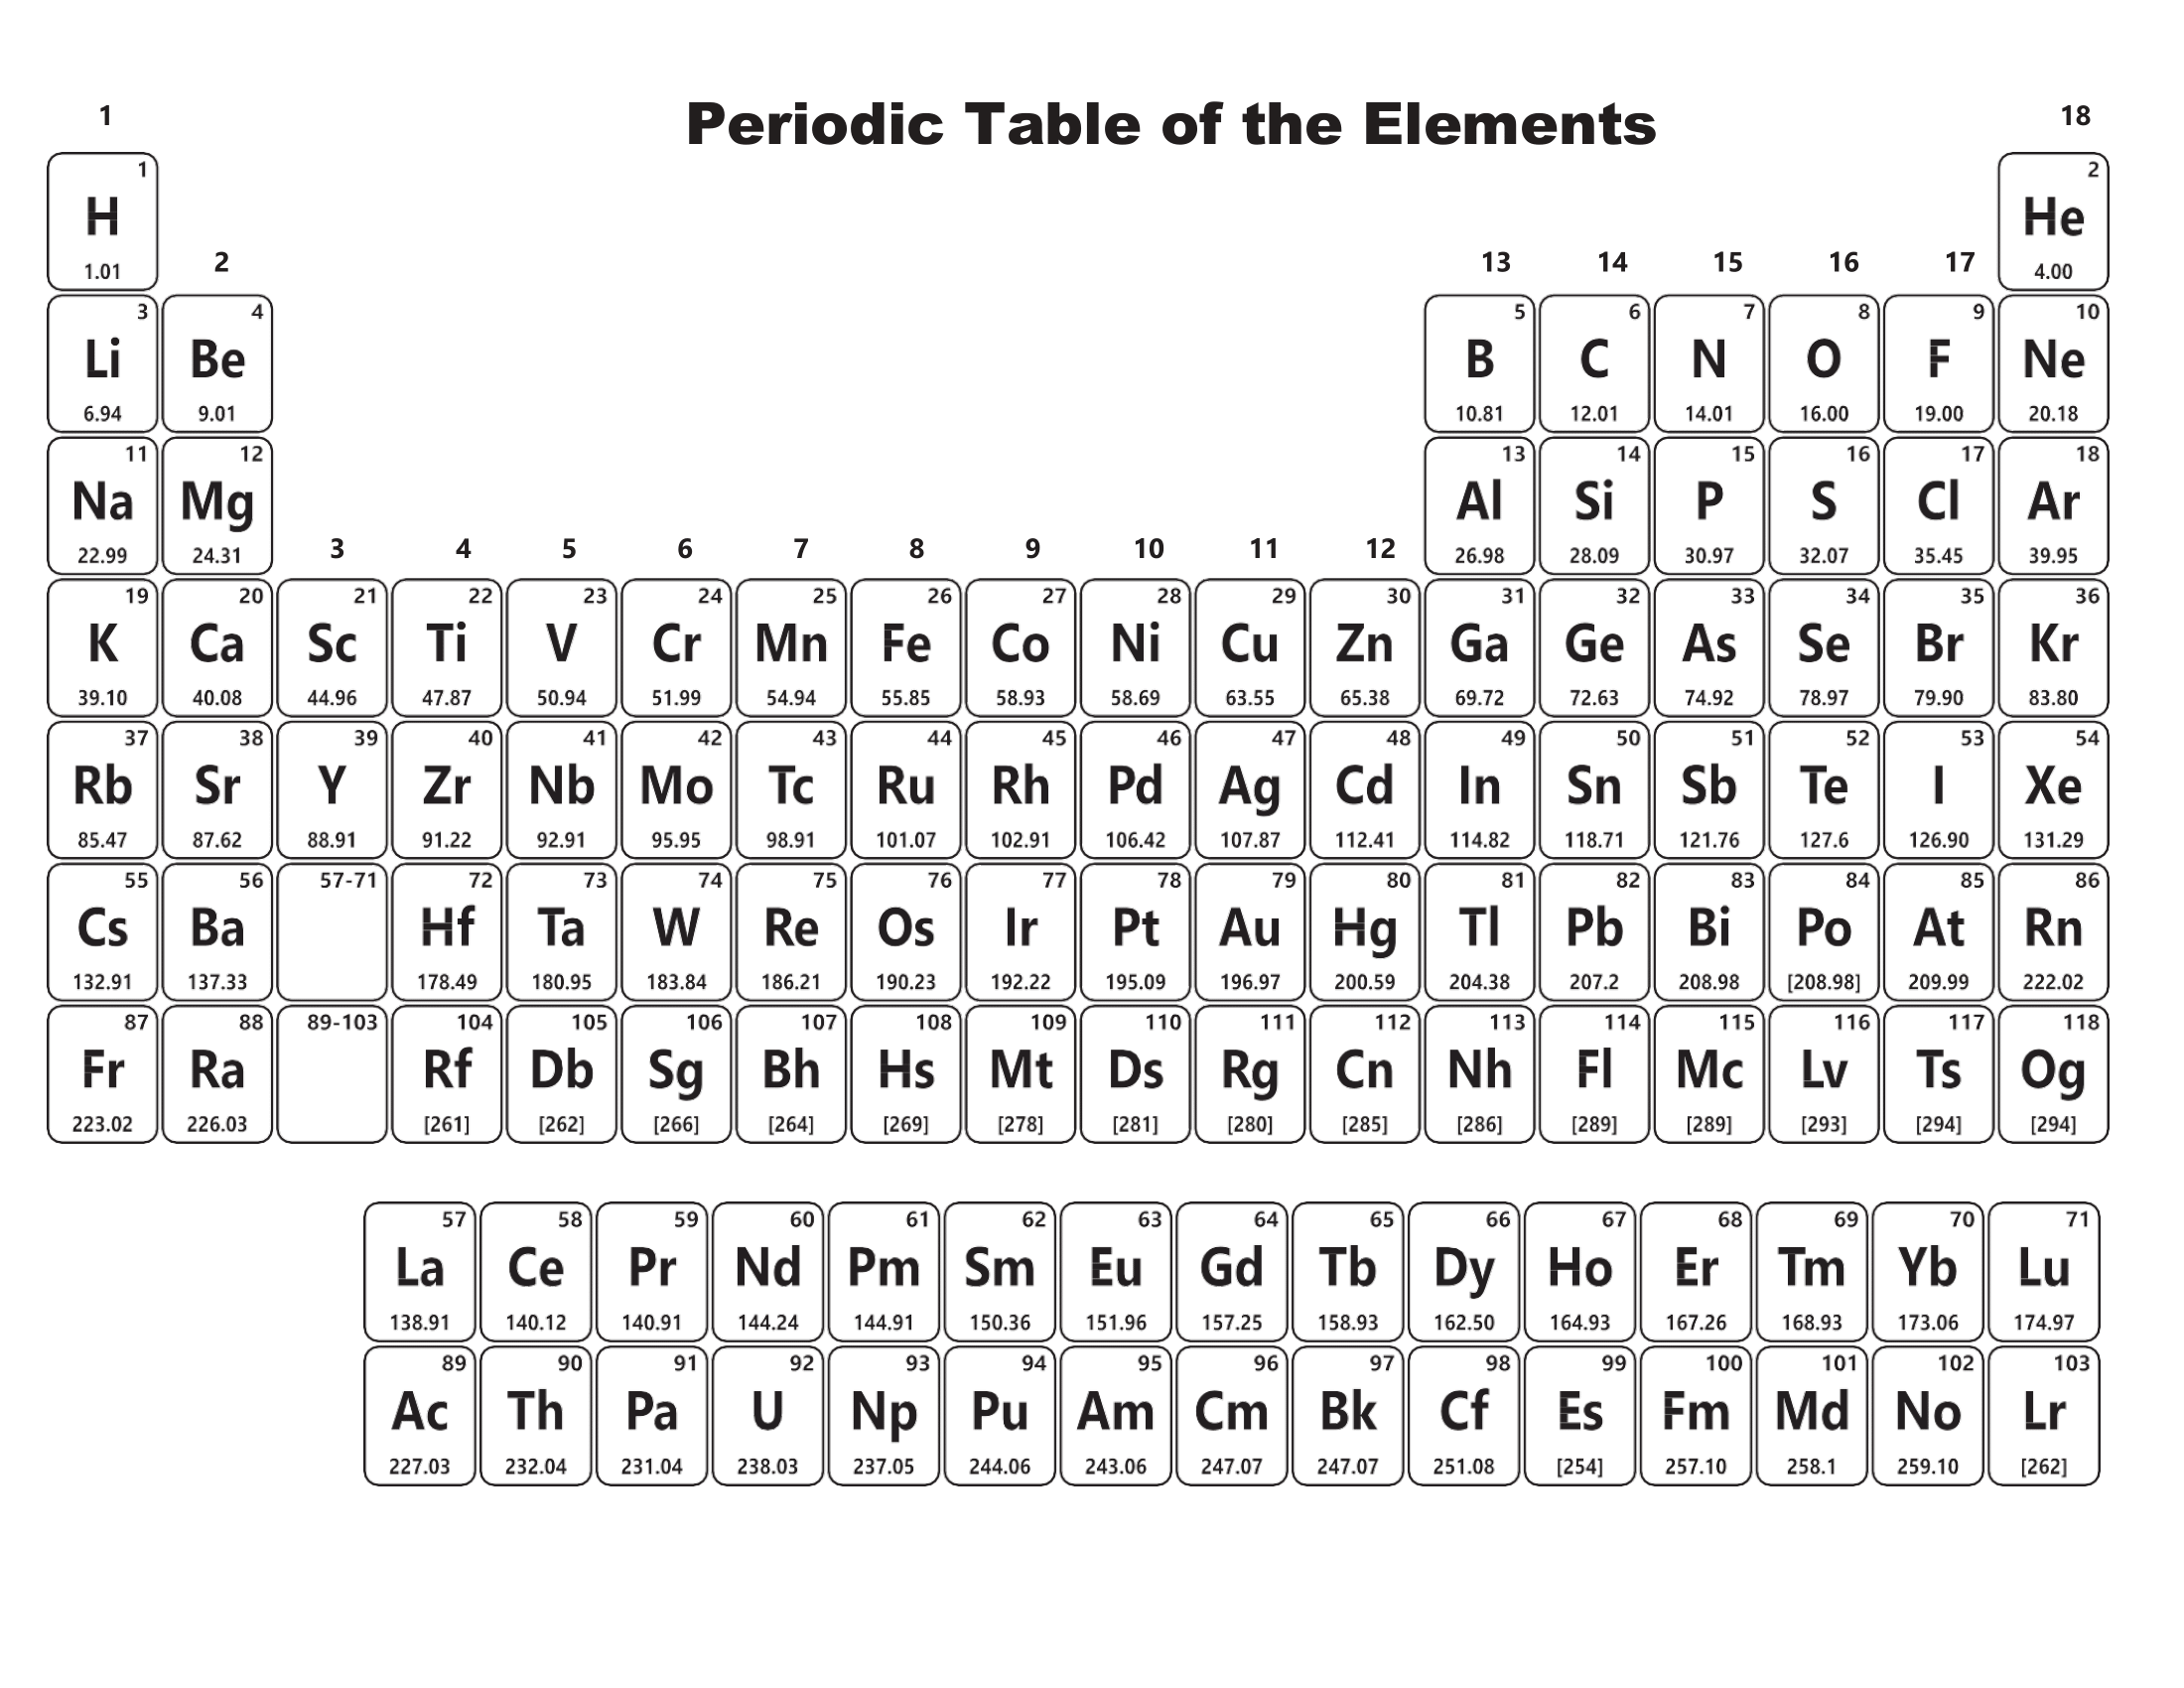 Free Printable Periodic Tables